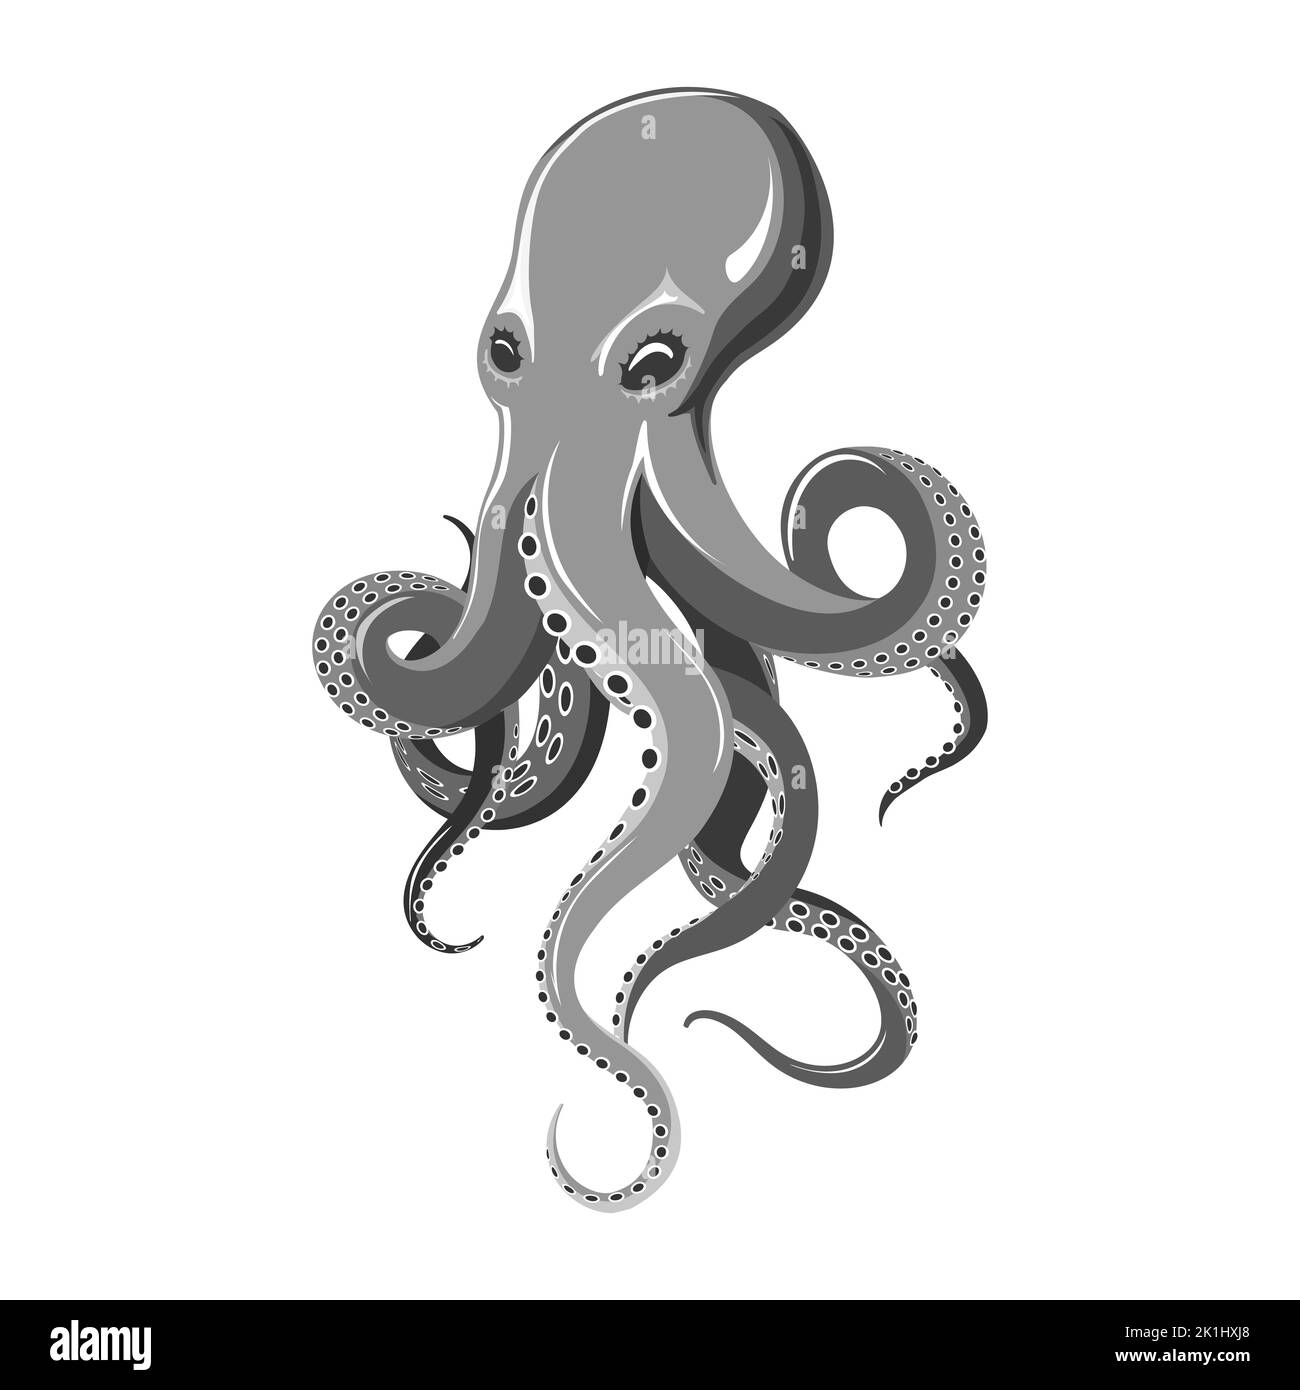 Octopus kraken illustration Stock Vector